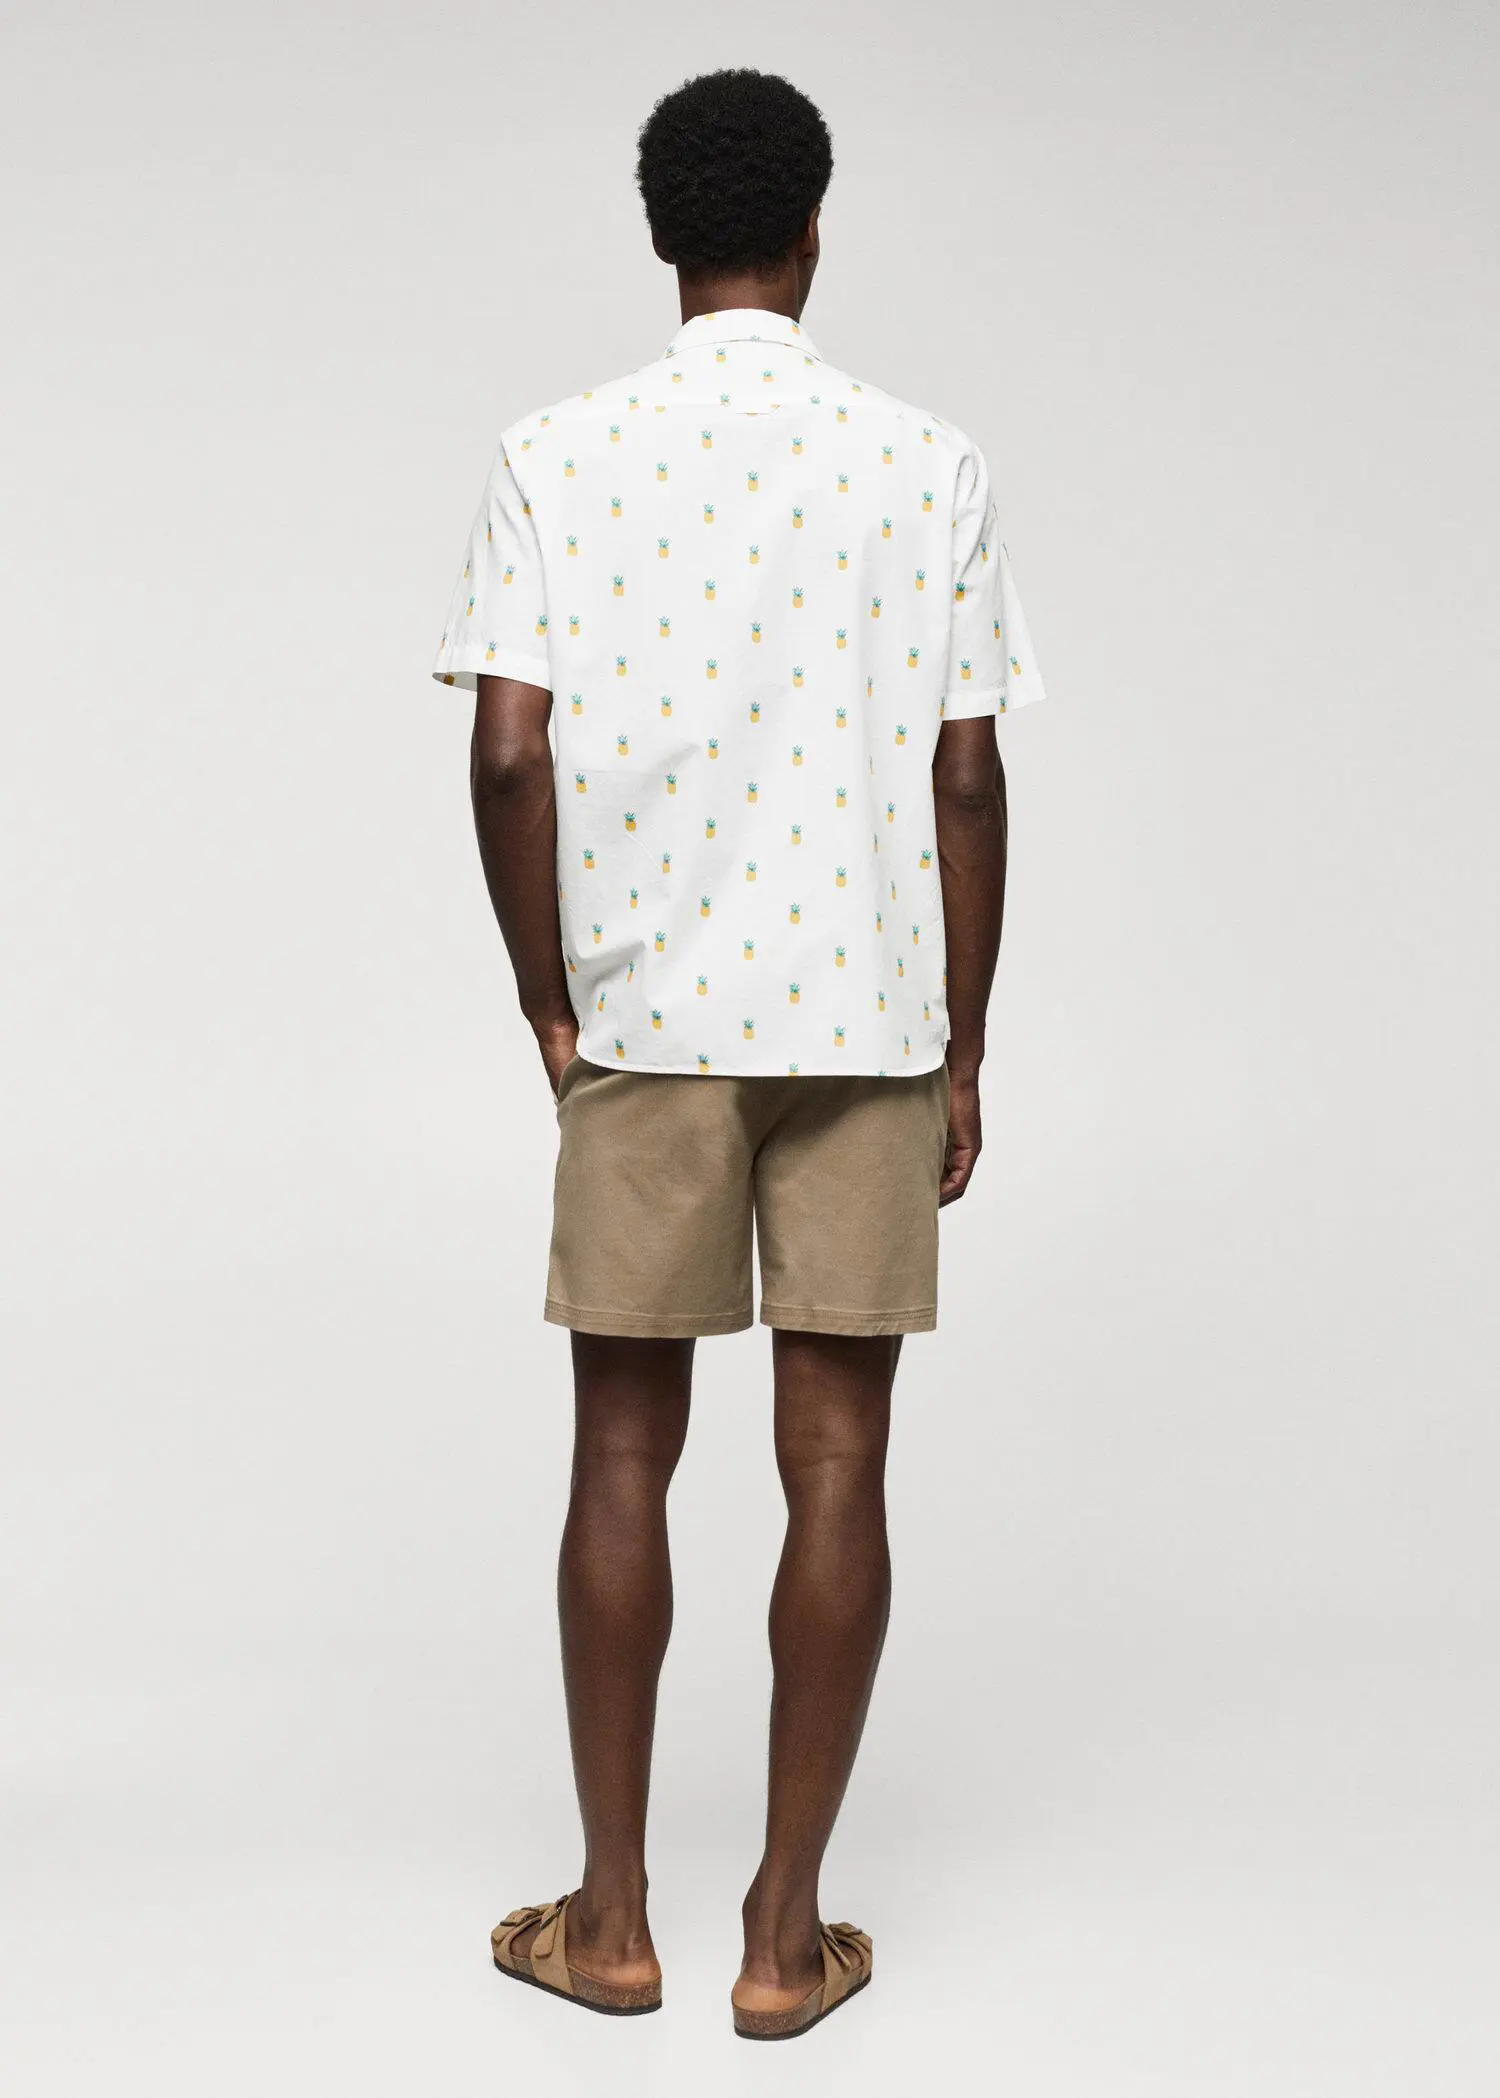 Mango 100% cotton shirt with pineapple print. 3